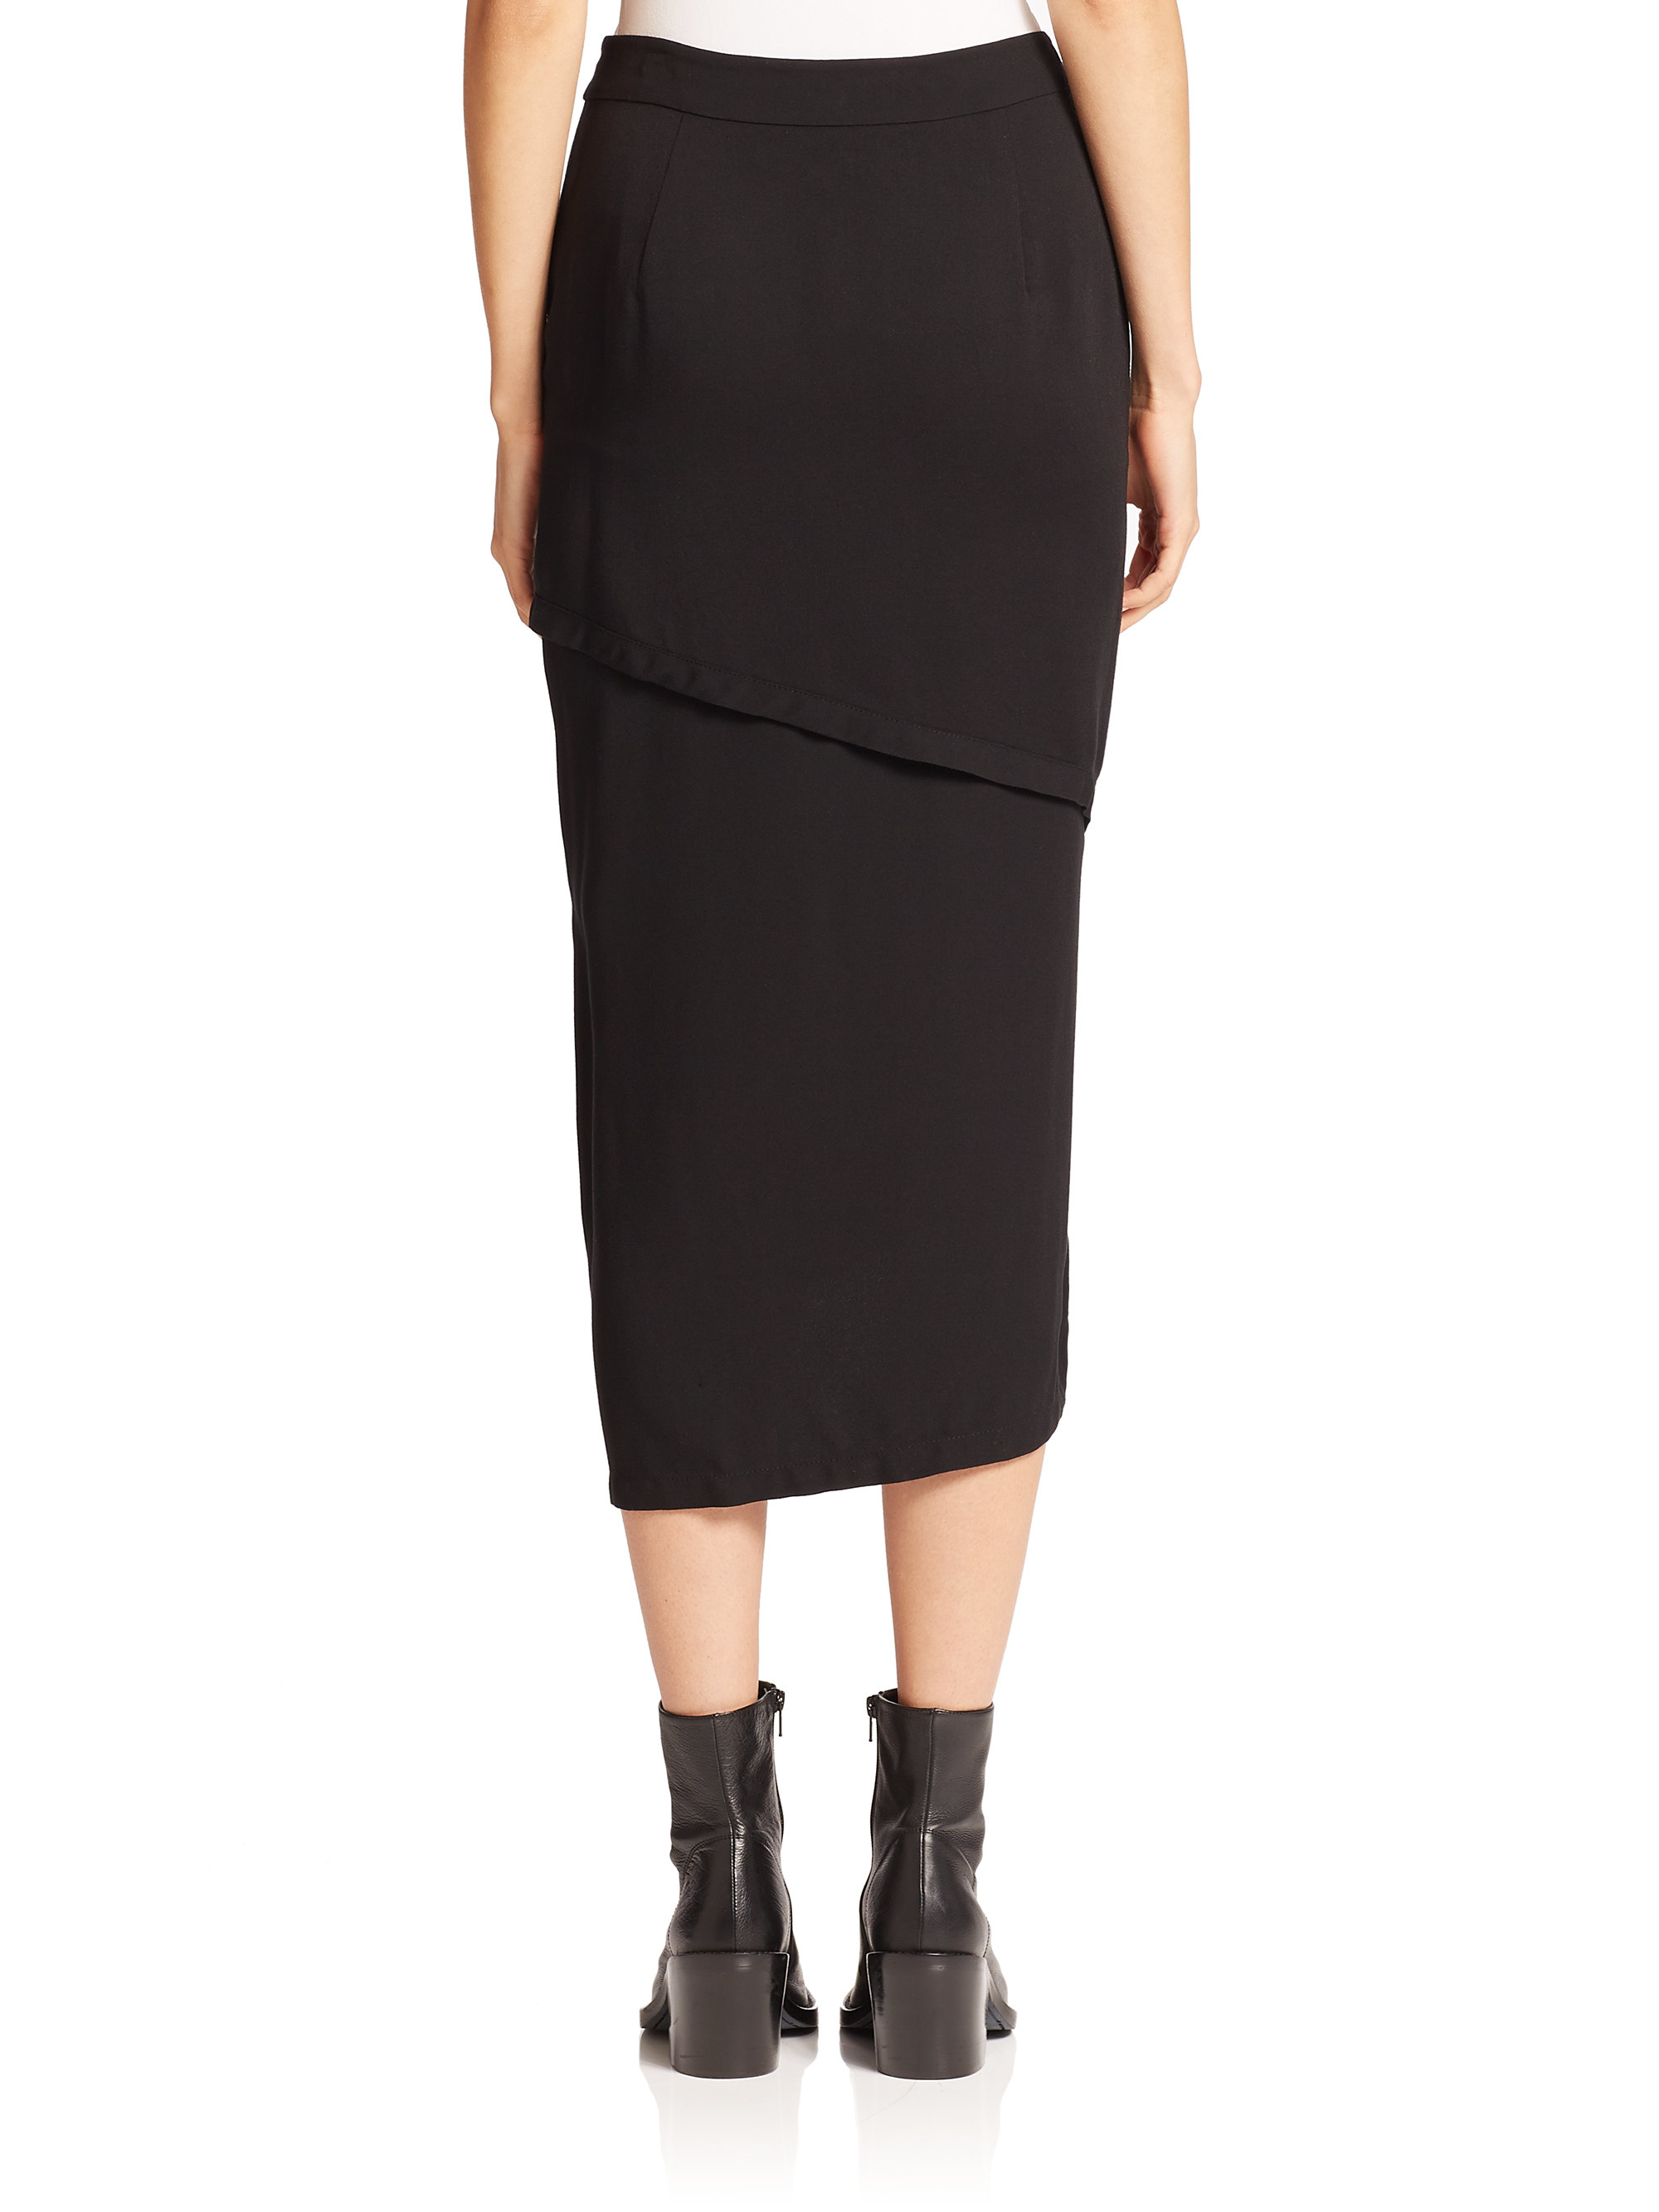 DKNY Midi Wrap Skirt in Black - Lyst